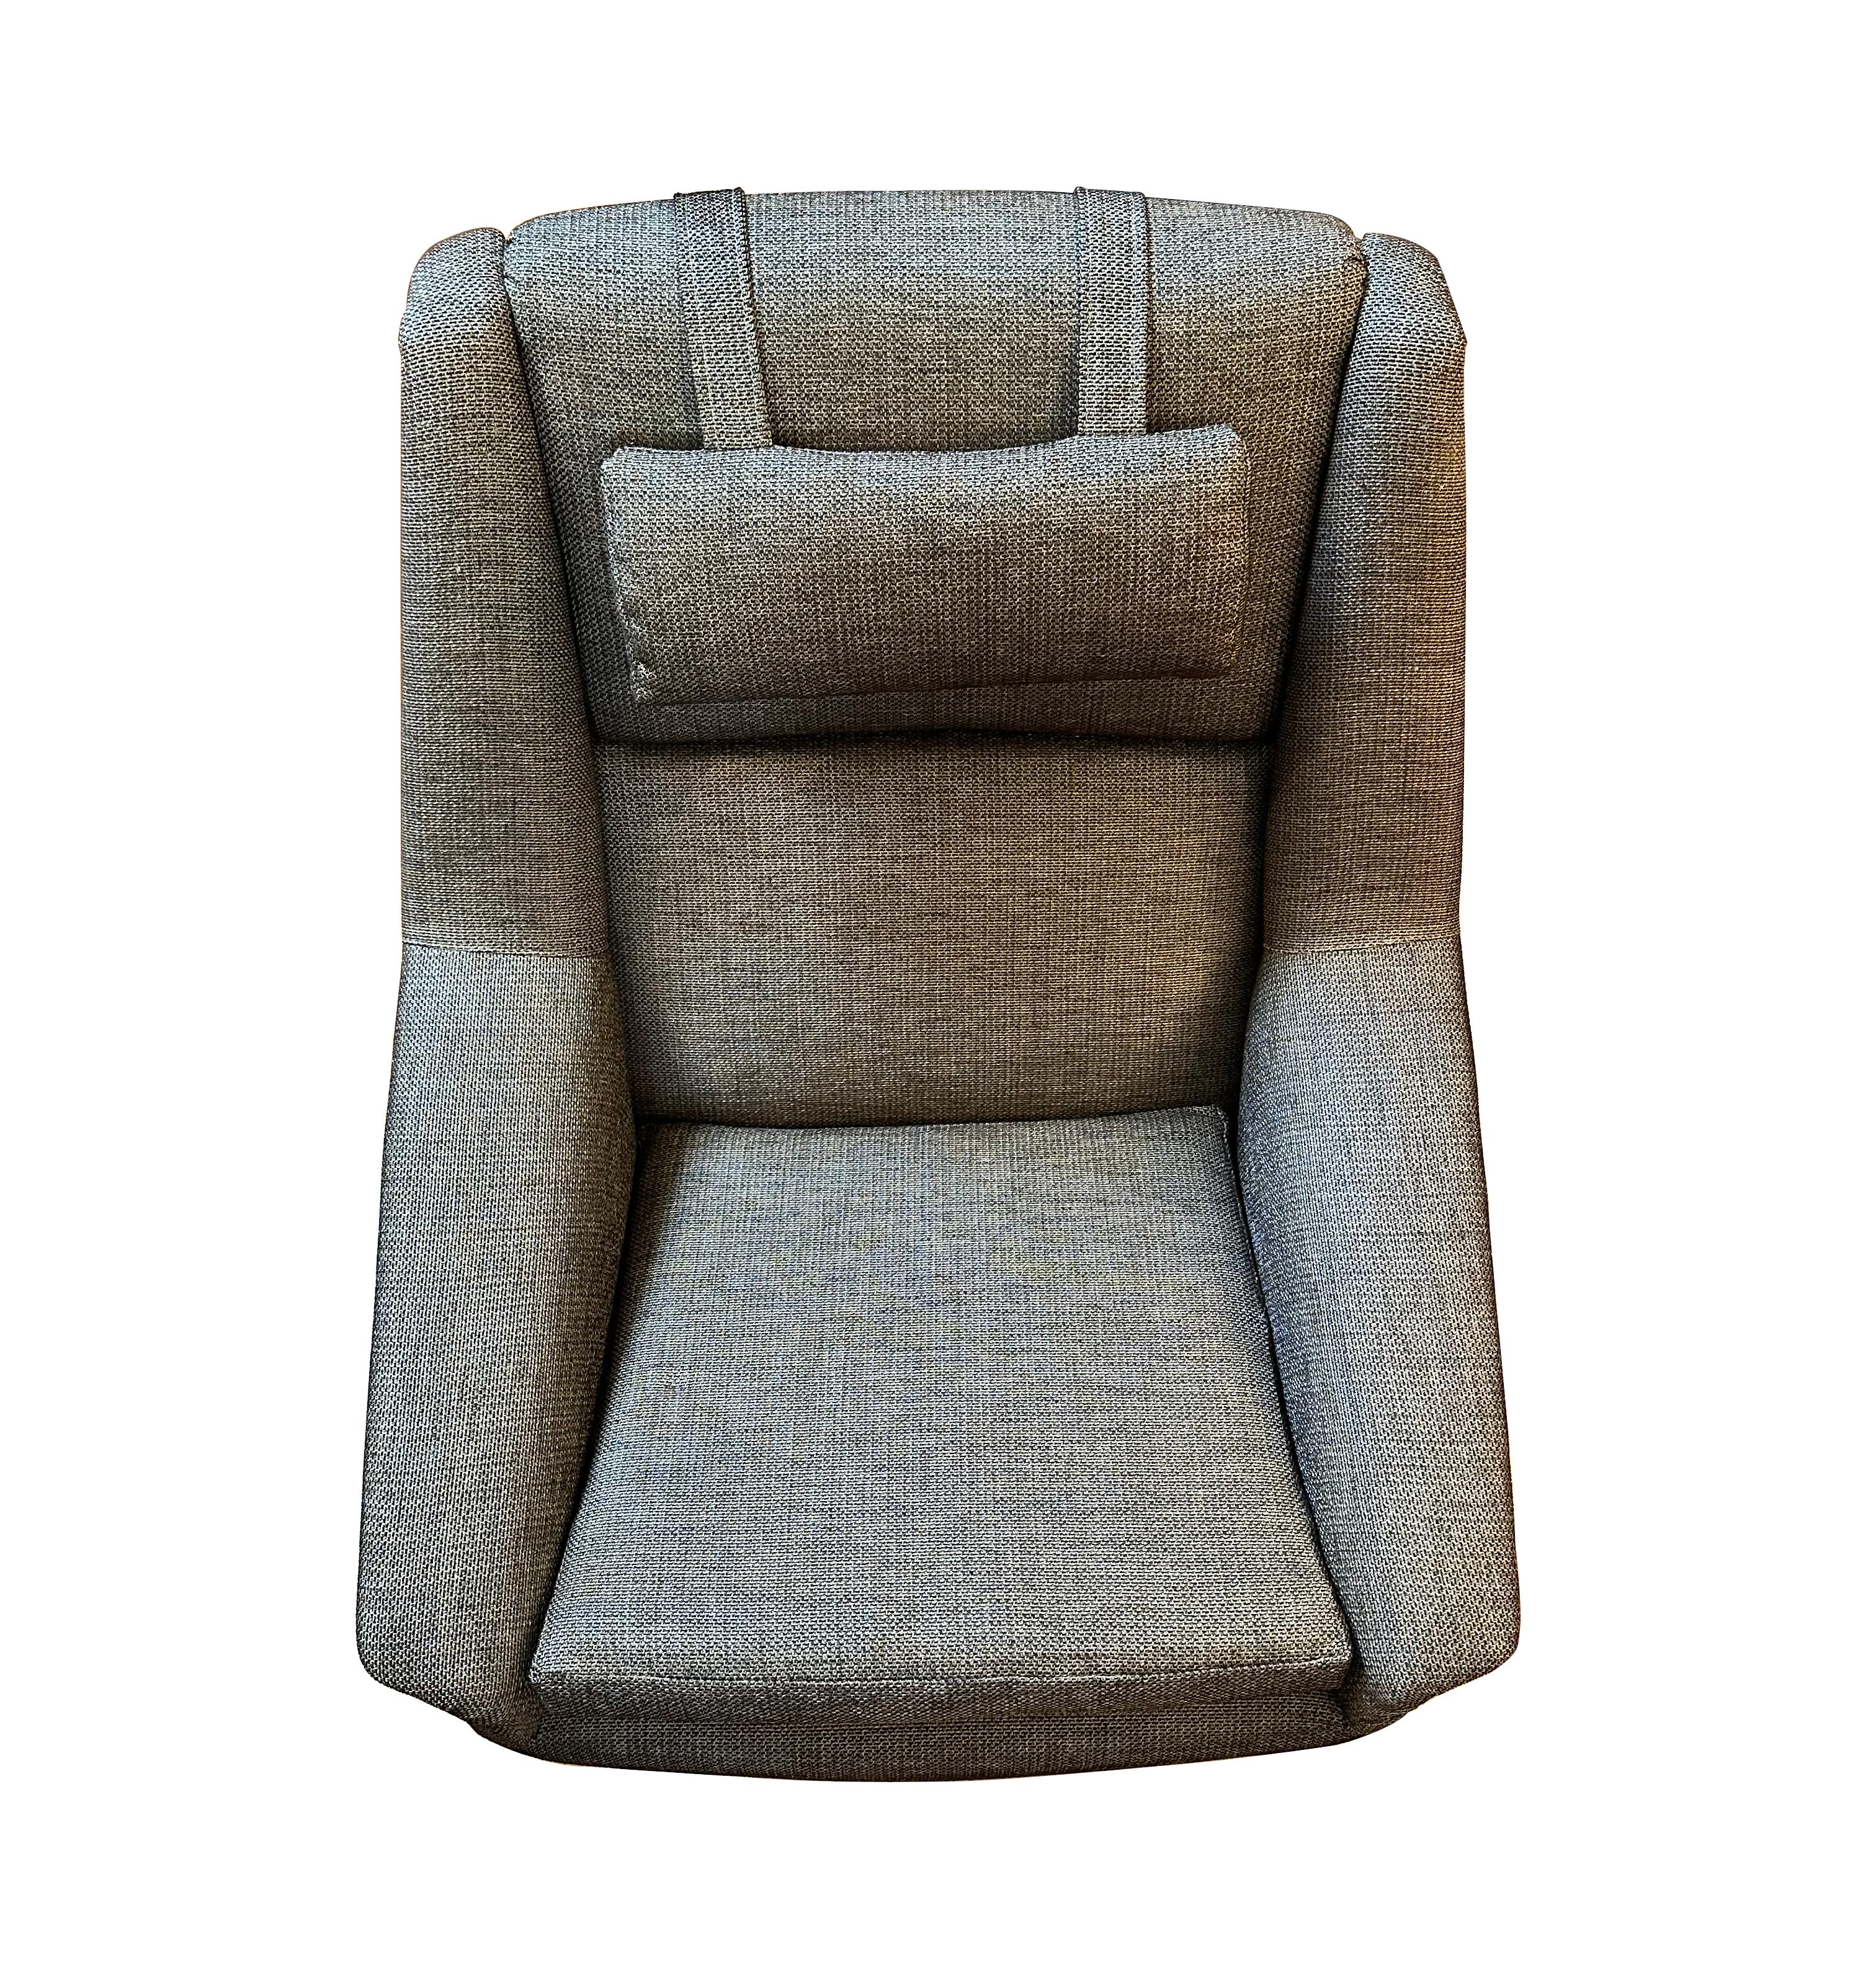 Scandinavian Modern Profil Lounge Chair by Folke Ohlsson for Dux Sweden 1